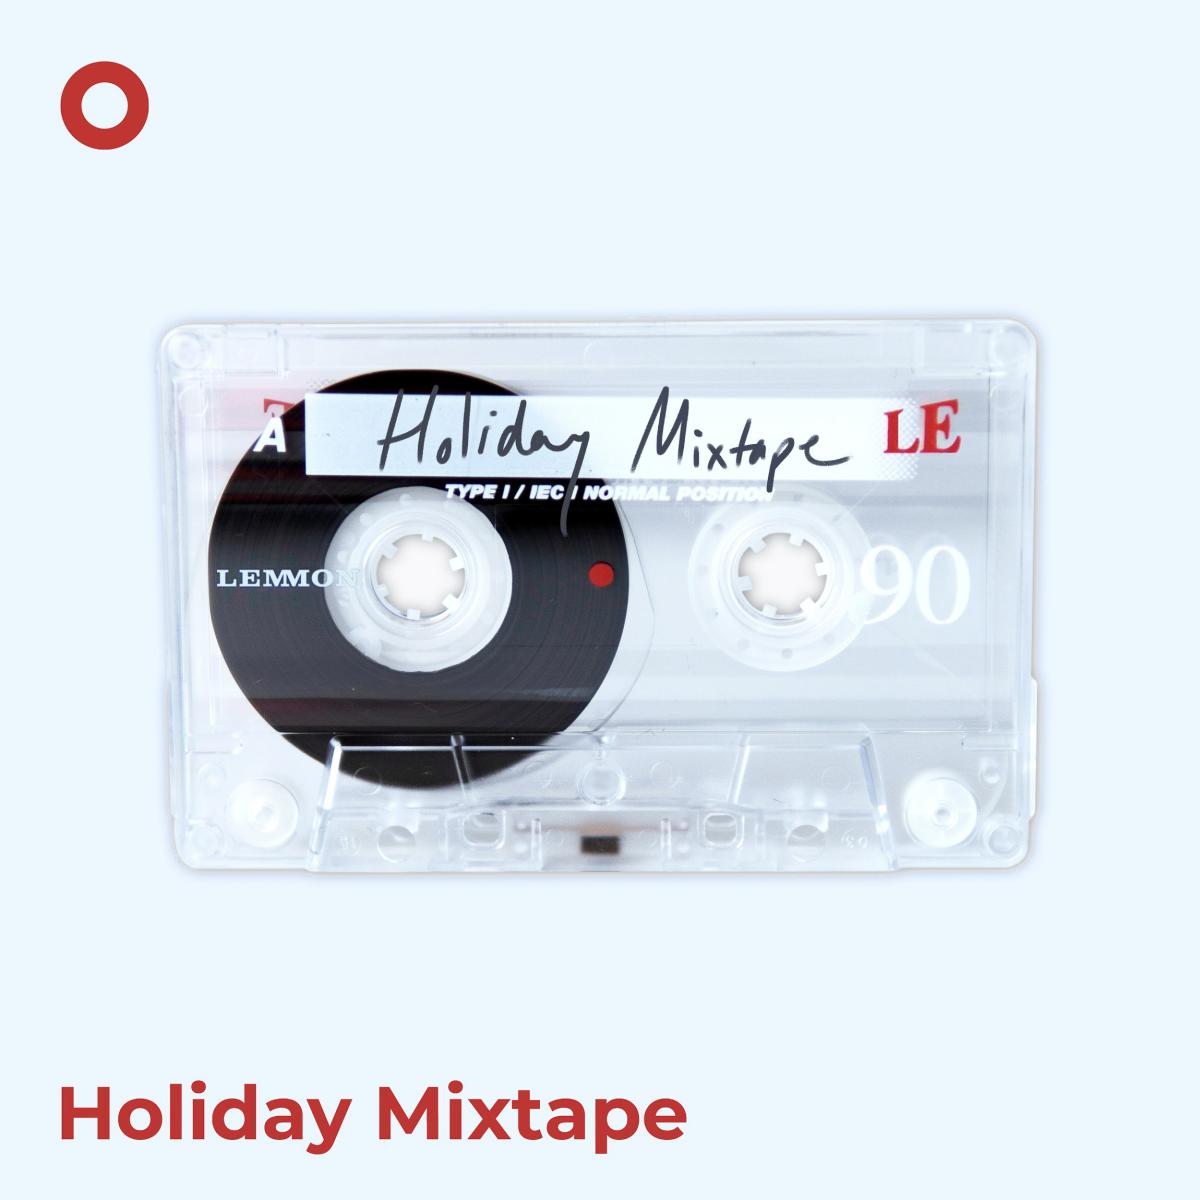  Lemmon Entertainment Releases Holiday Mixtape To Benefit School Music Programs via MusiCounts Band Aid Program